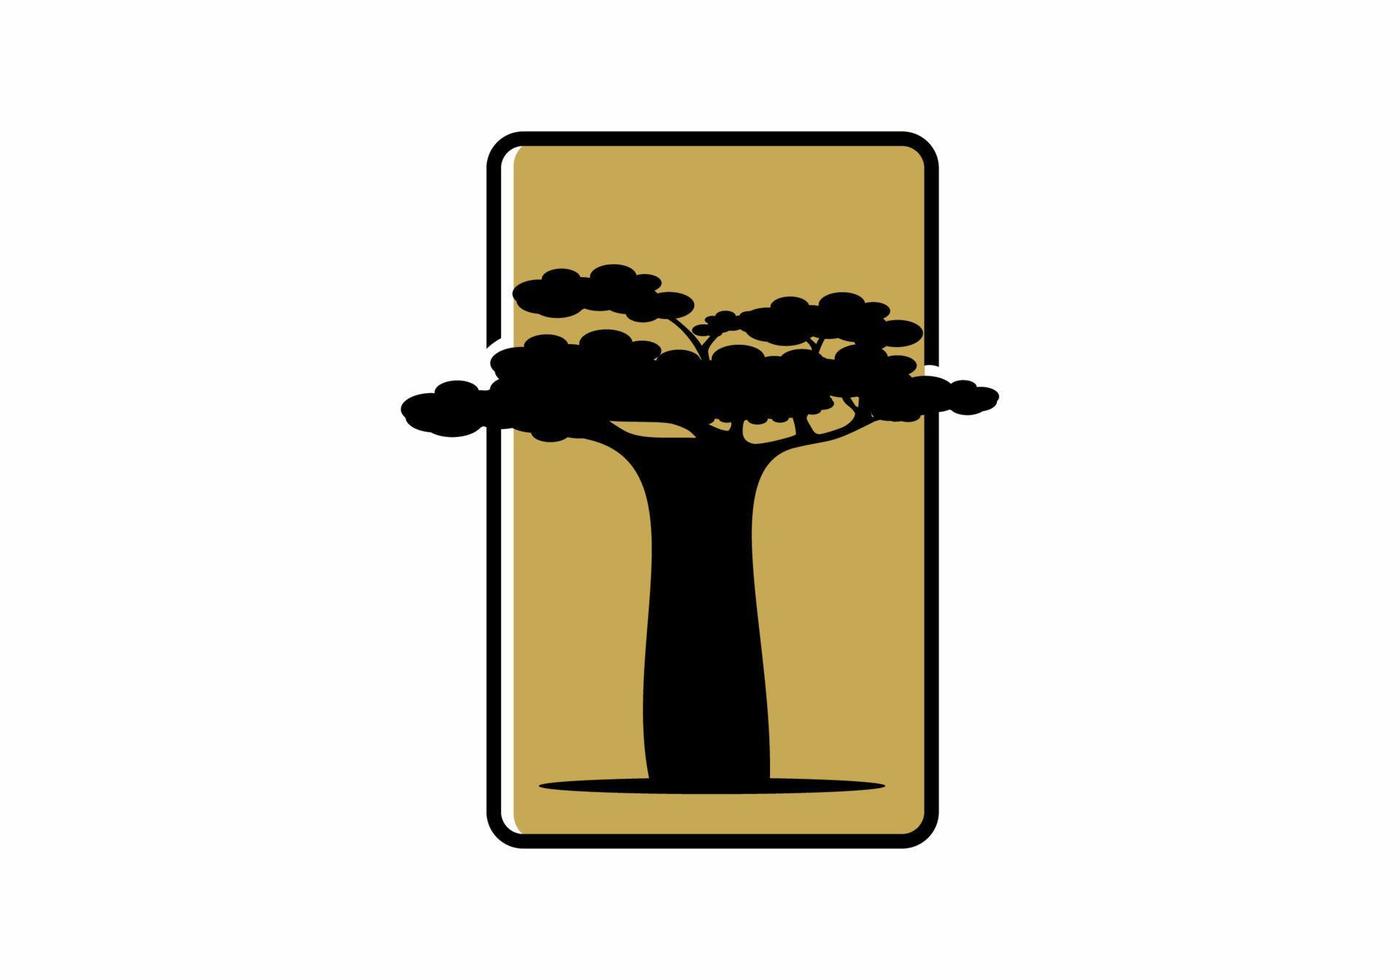 zwart goud kleur van baobab boom vector